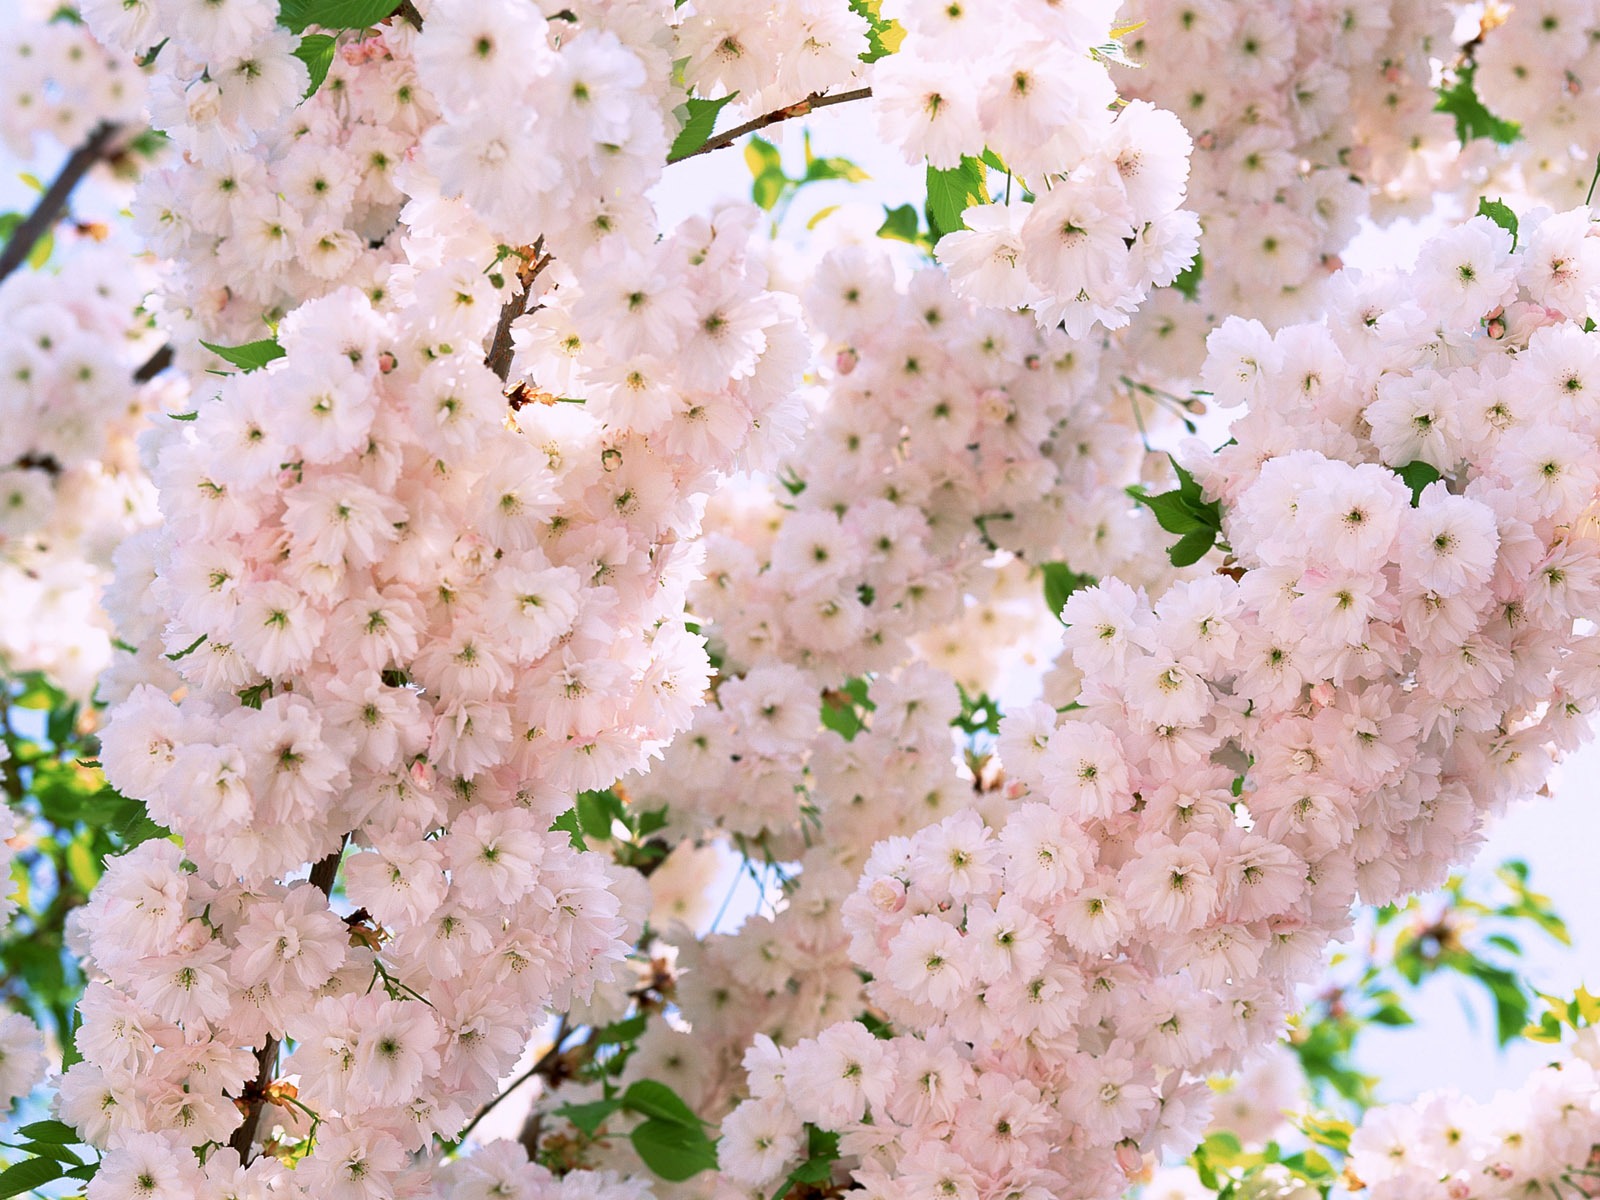 Flowers close-up (16) #14 - 1600x1200